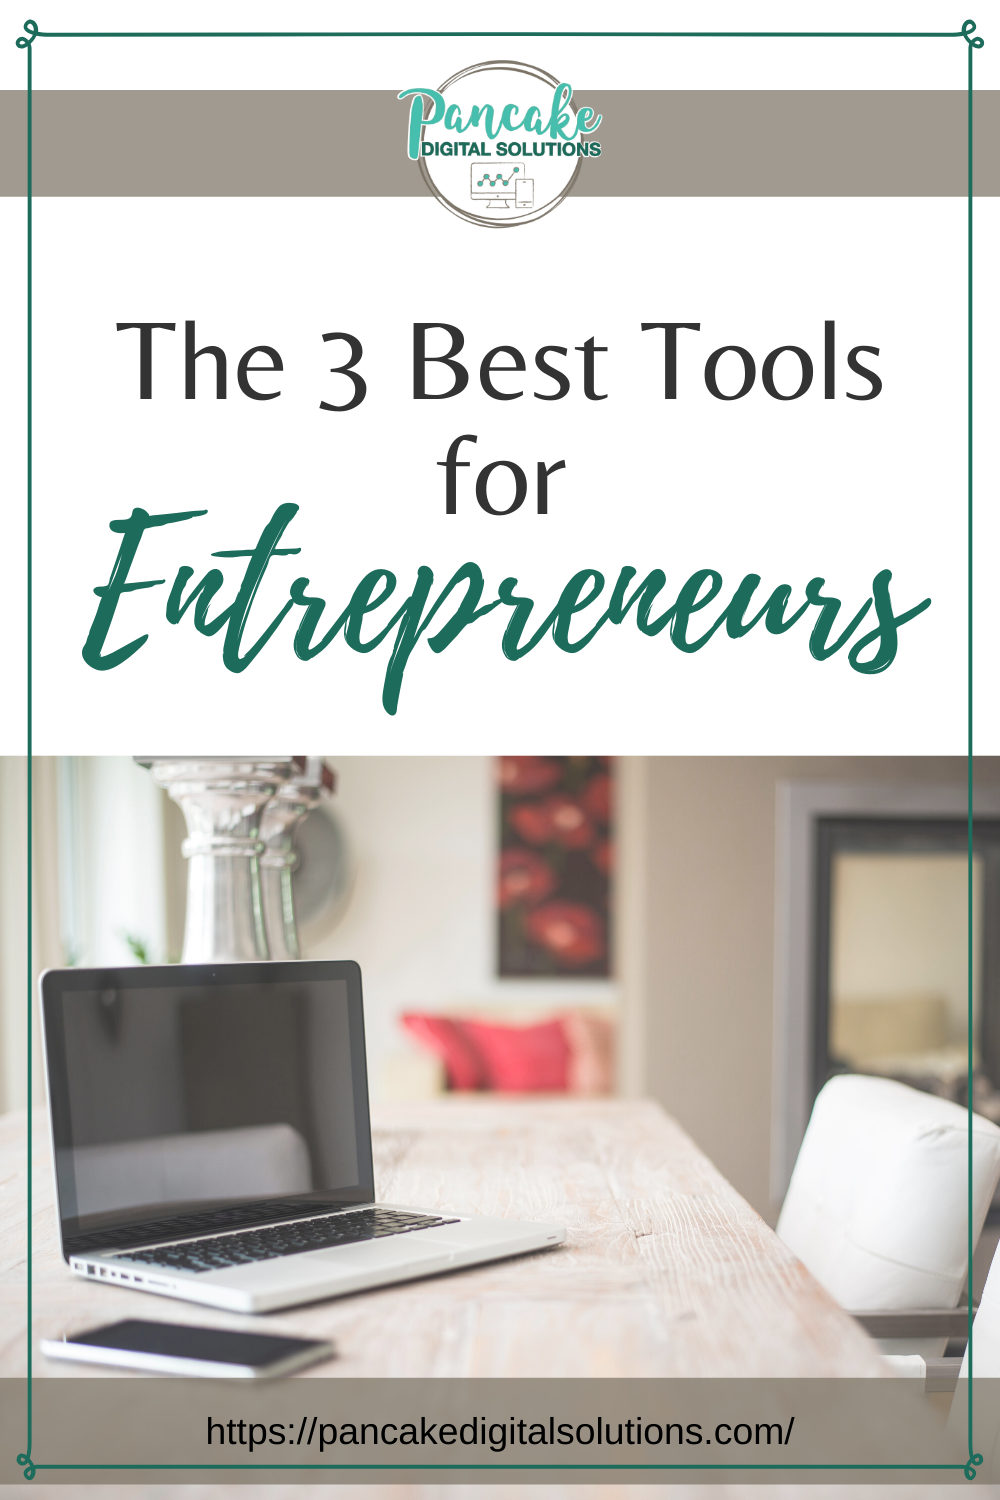 The 3 Best Tools for Entrepreneurs